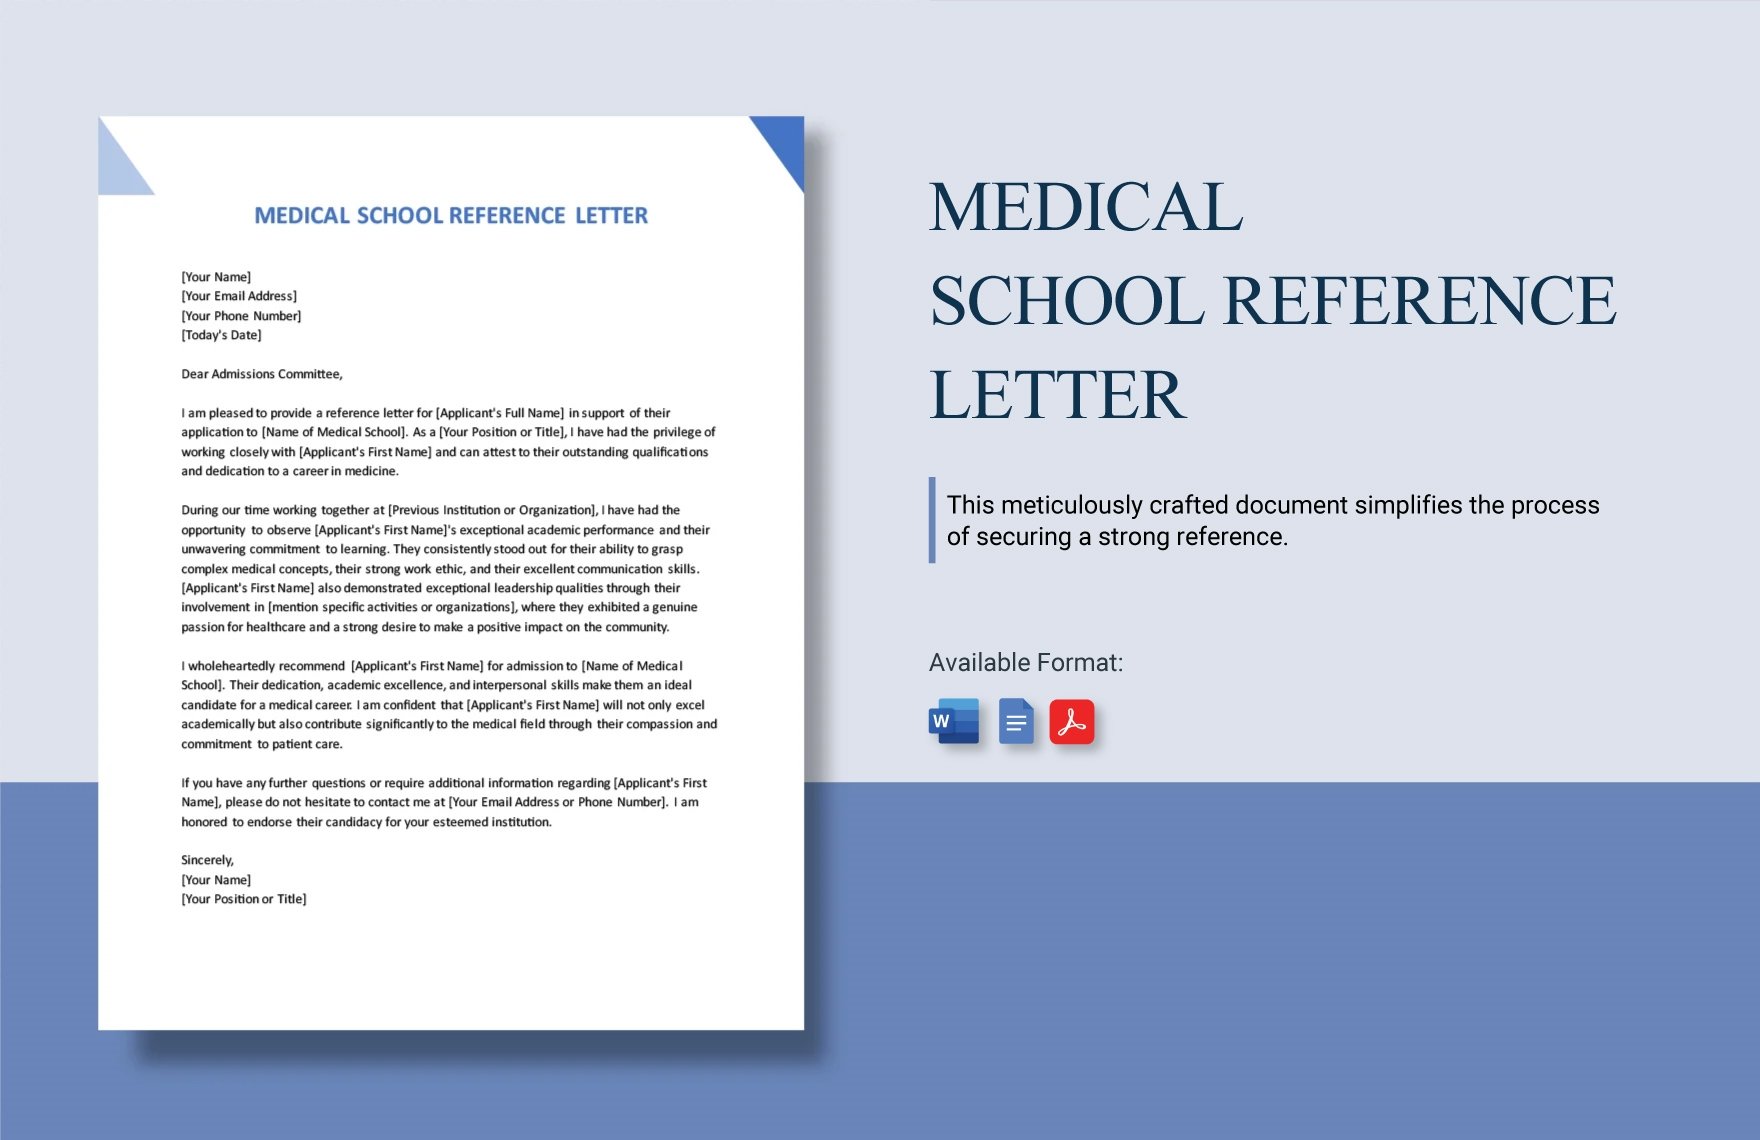 Medical School Reference Letter in Word, Google Docs, PDF